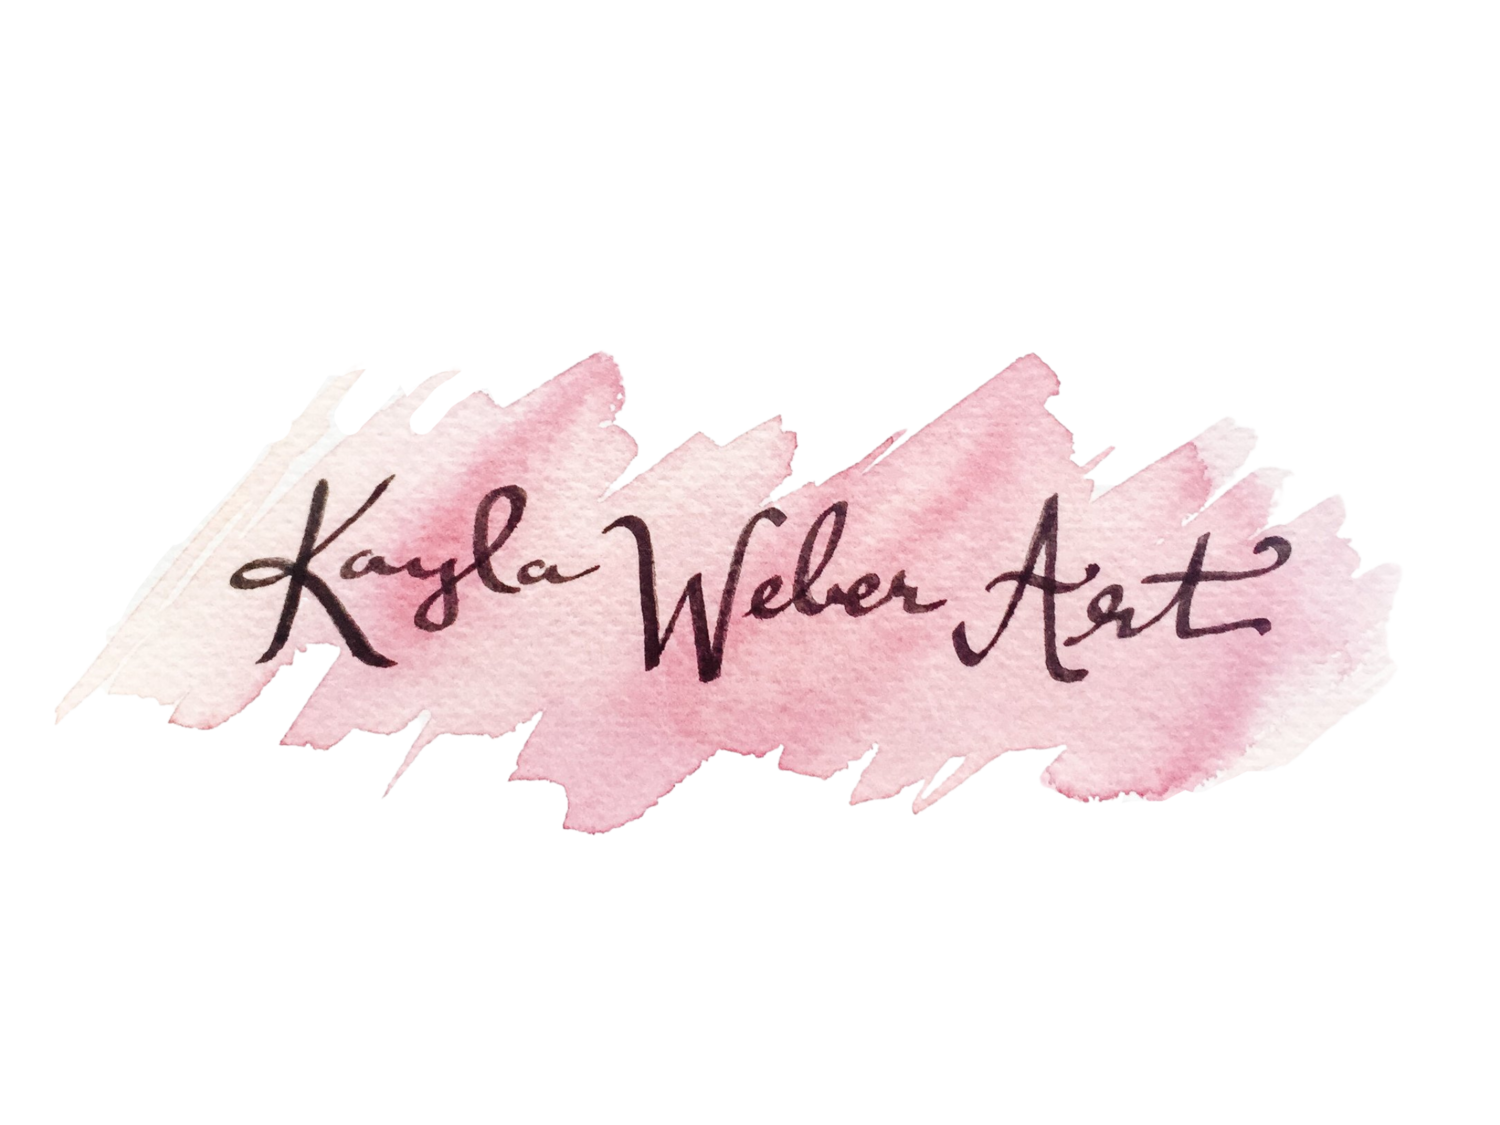 Kayla Weber Art